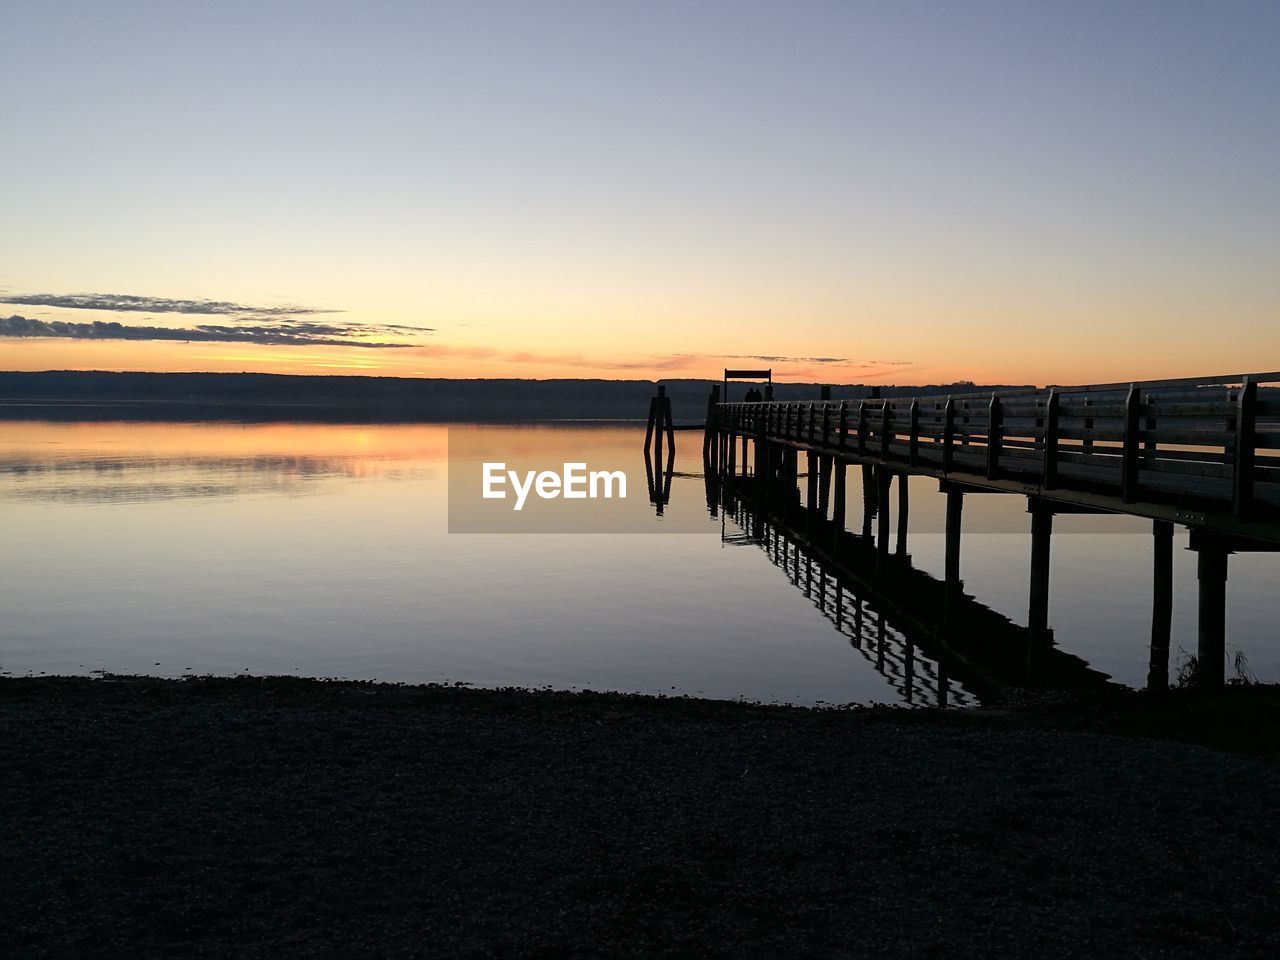 Pier over lake against sky during sunset